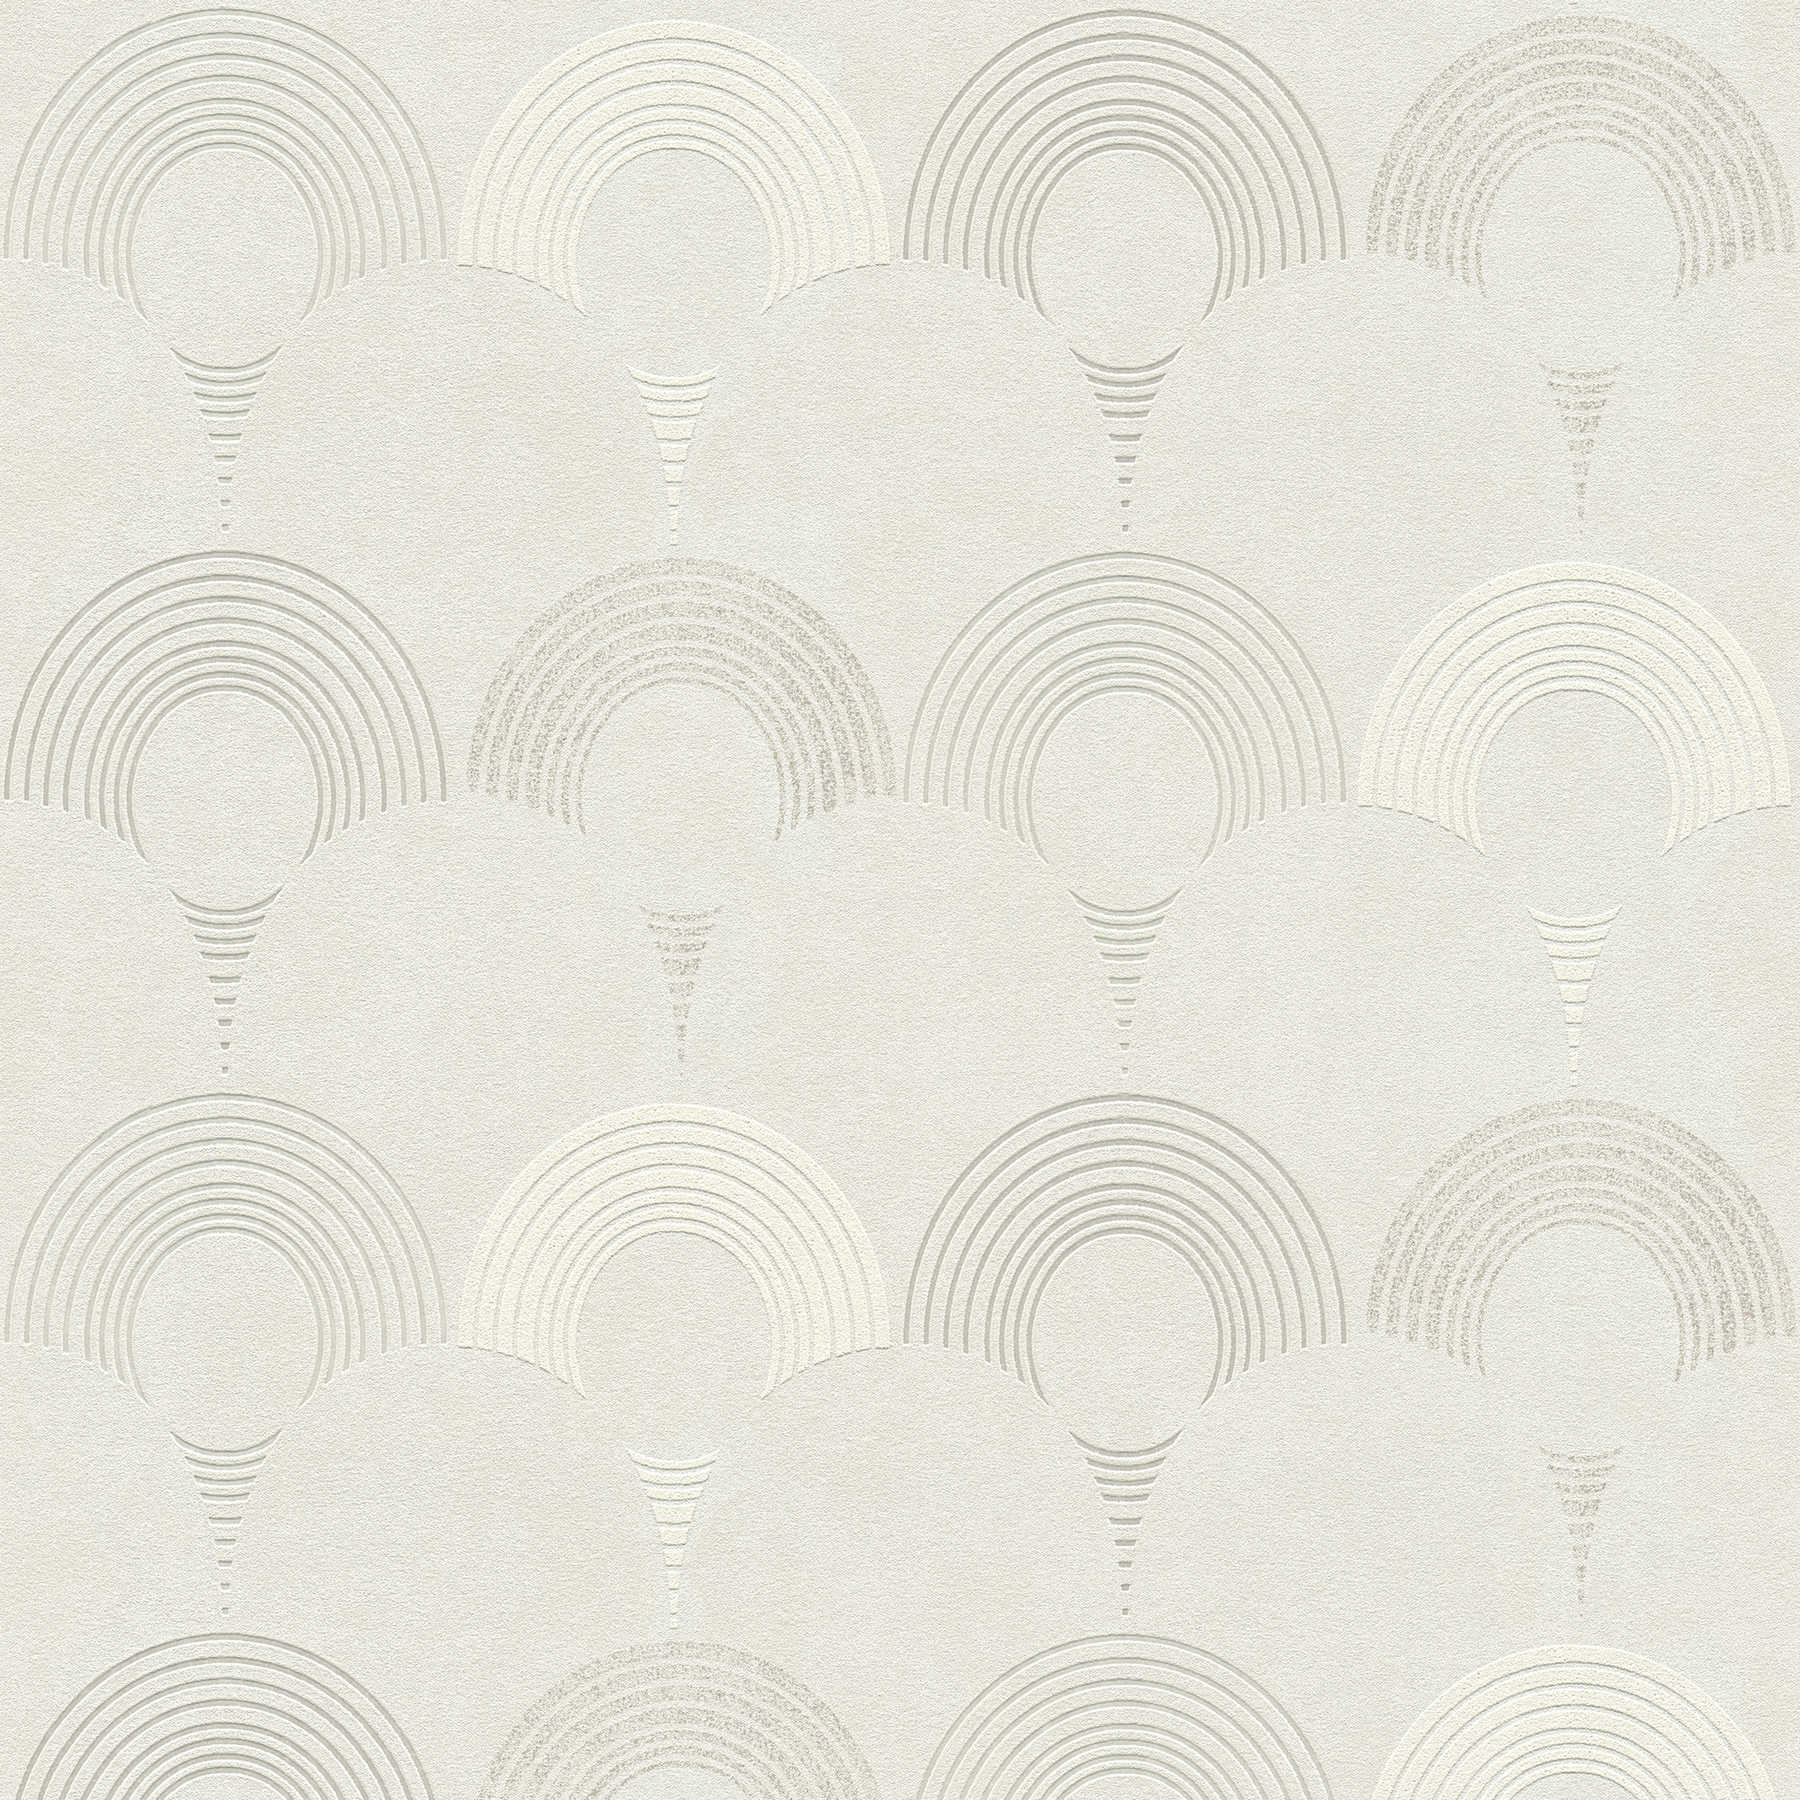         Non-woven wallpaper retro style, geometric circle pattern - grey, silver, white
    